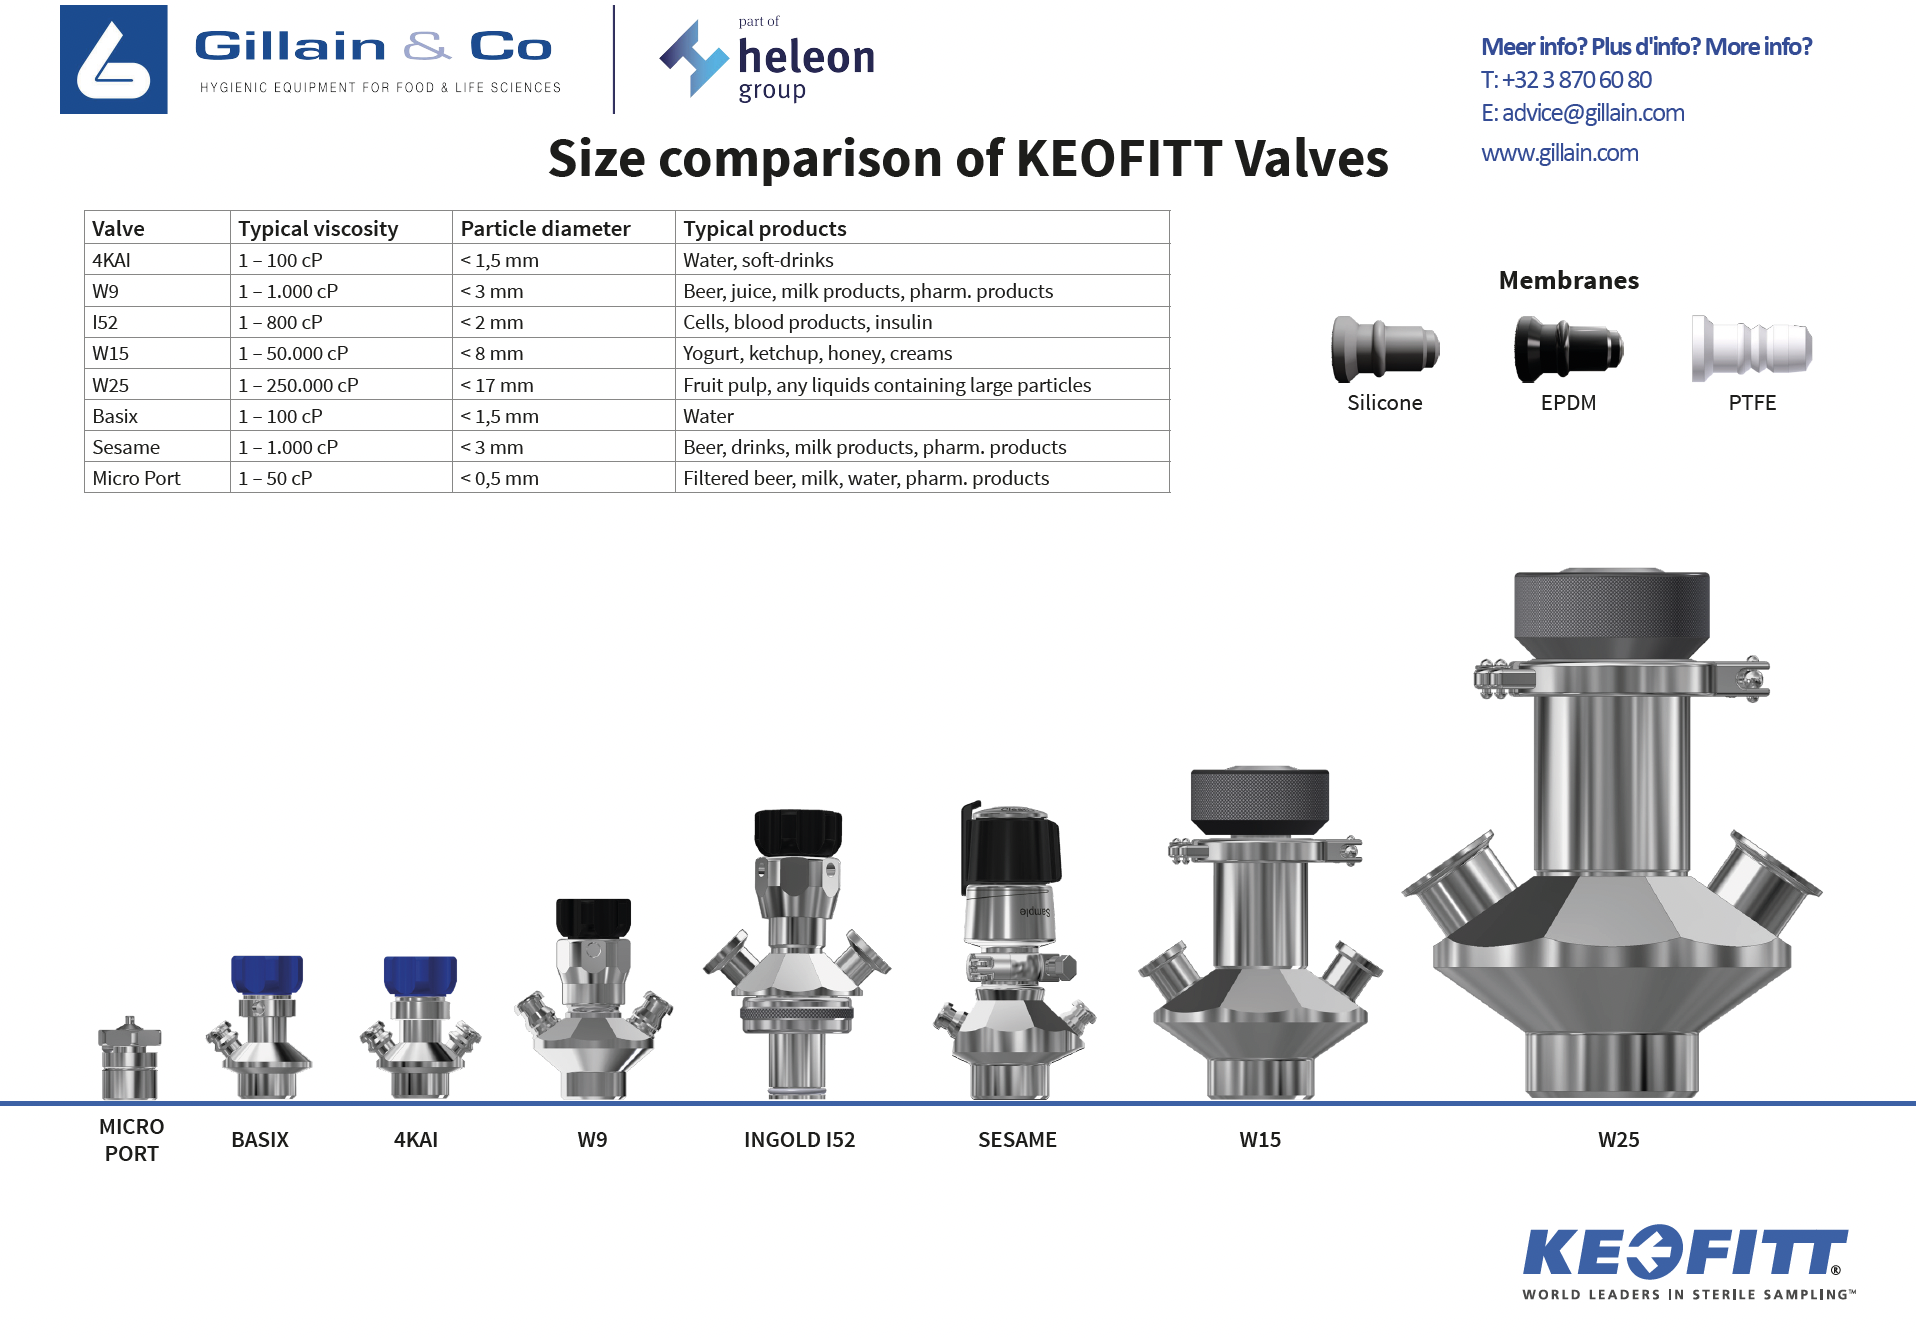 KEOFITT valves